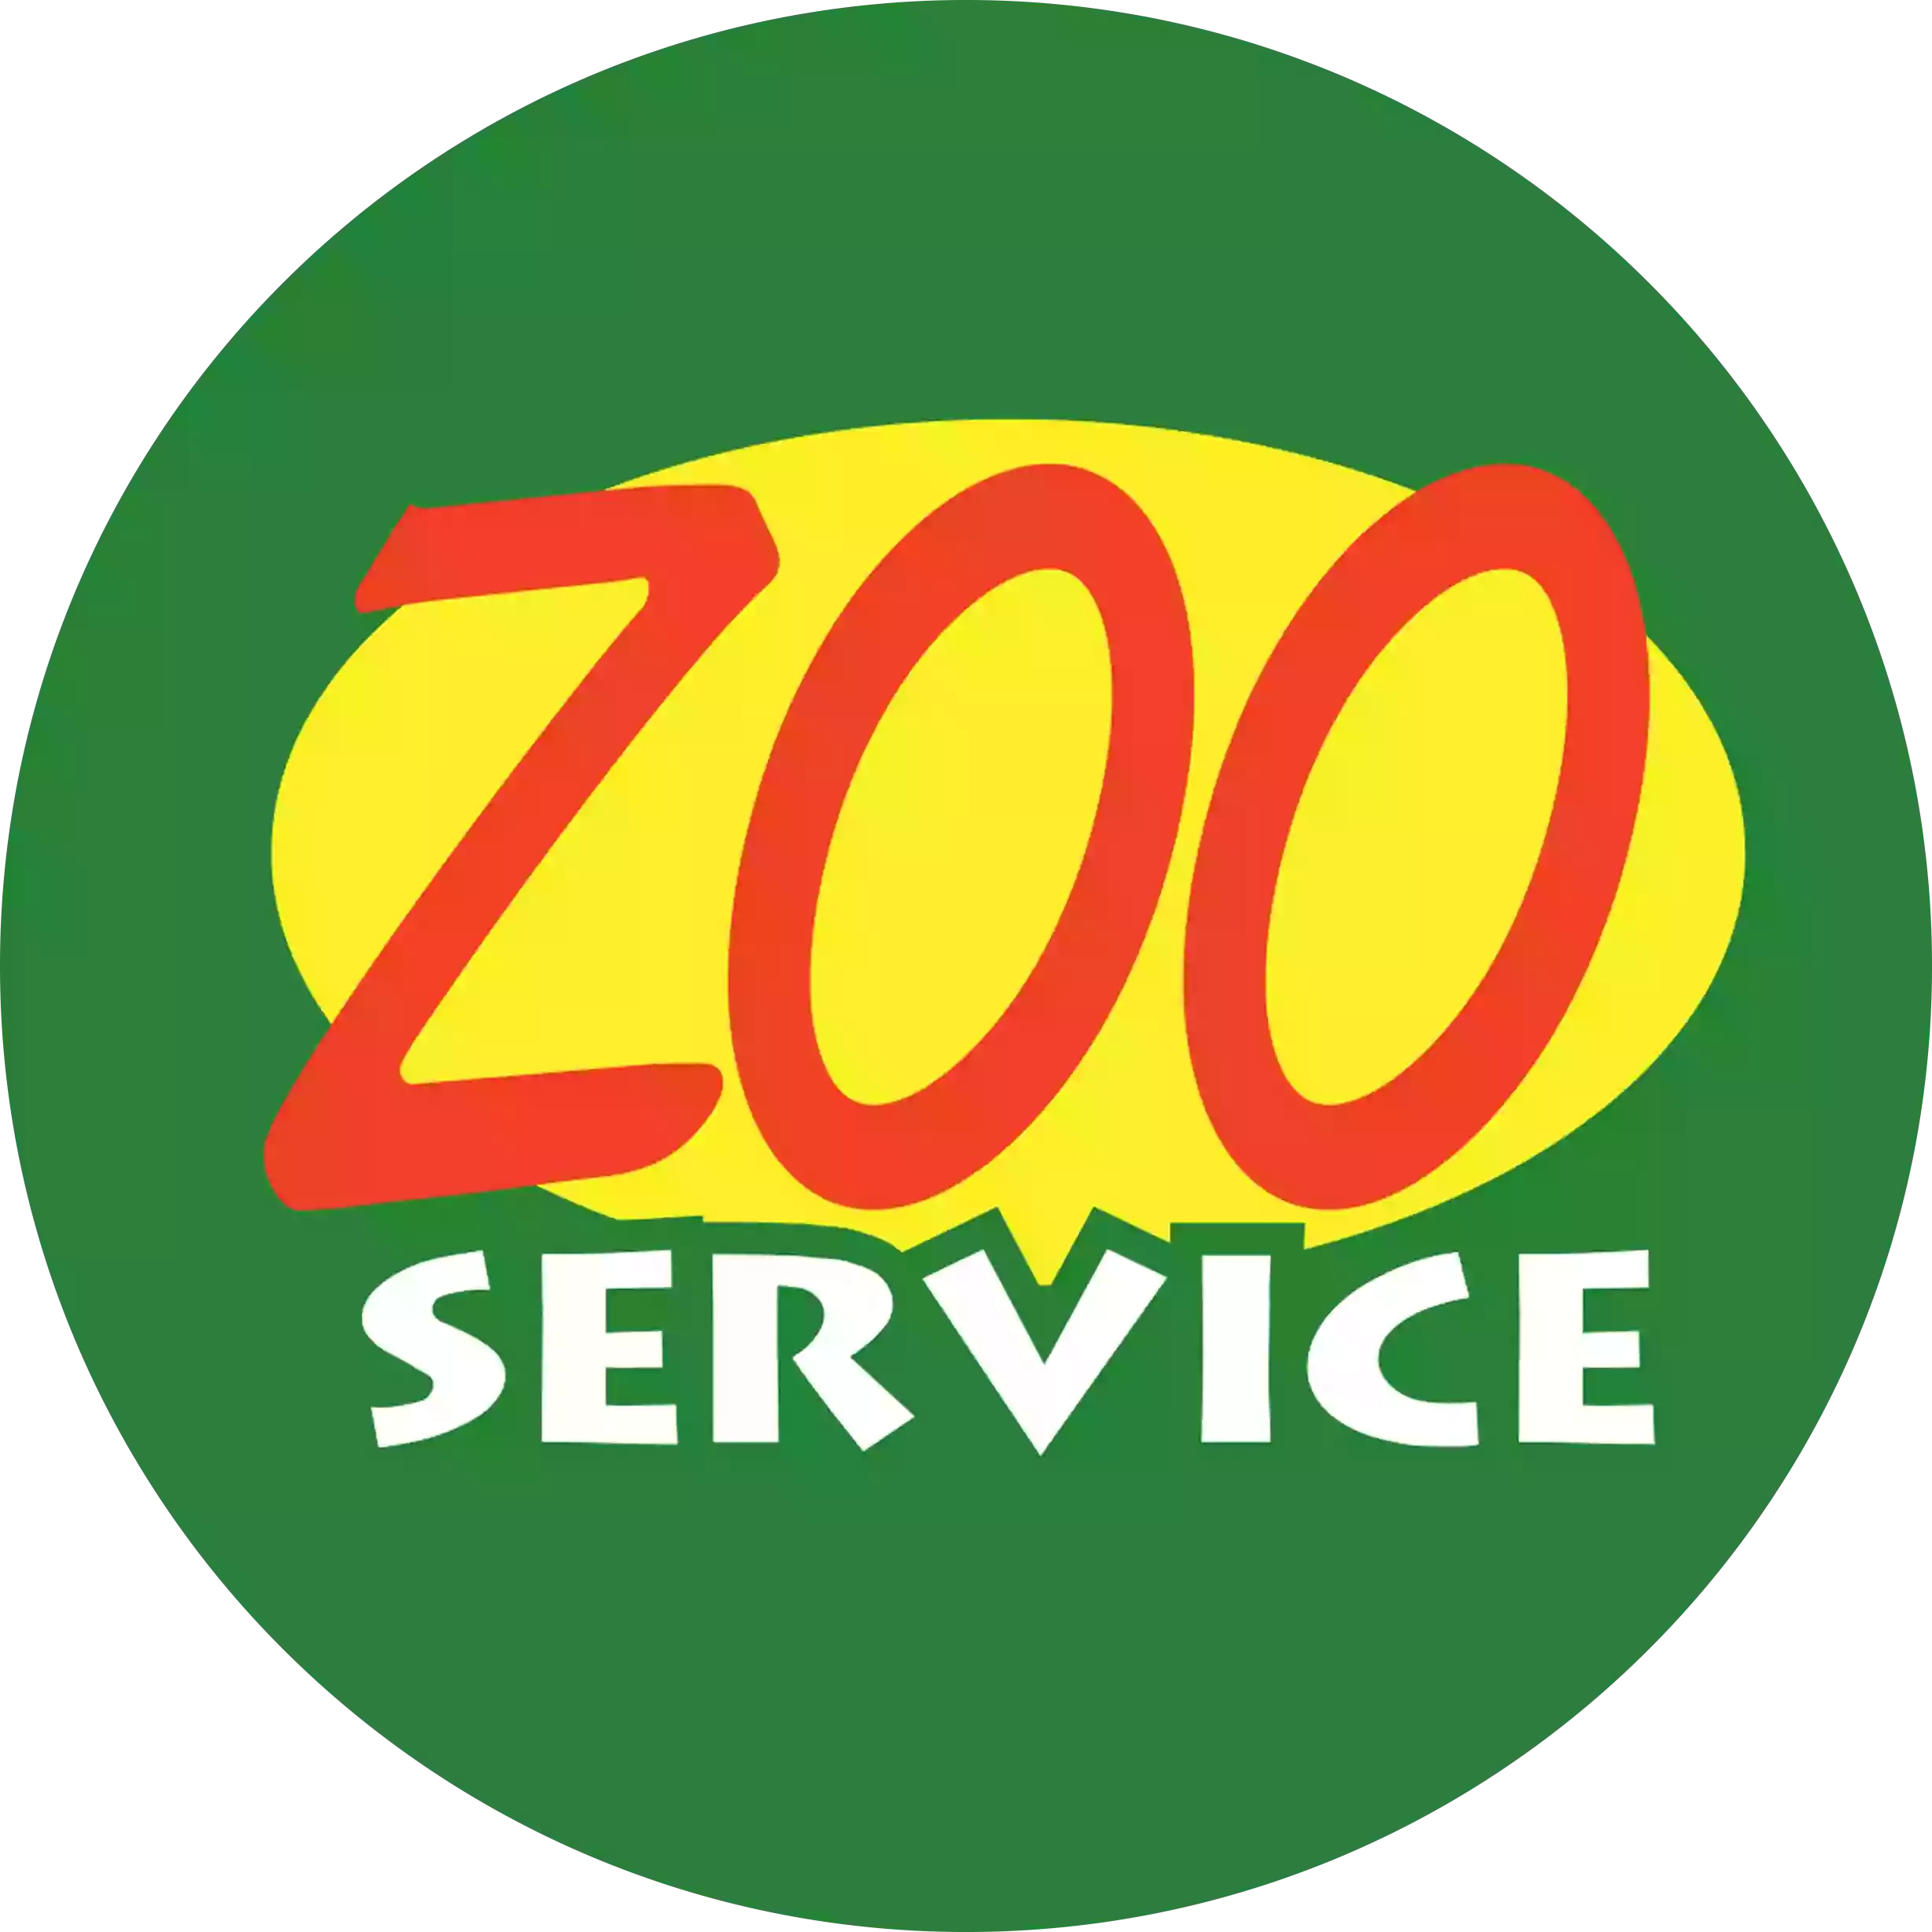 Zoo Service Uffici amministrativi